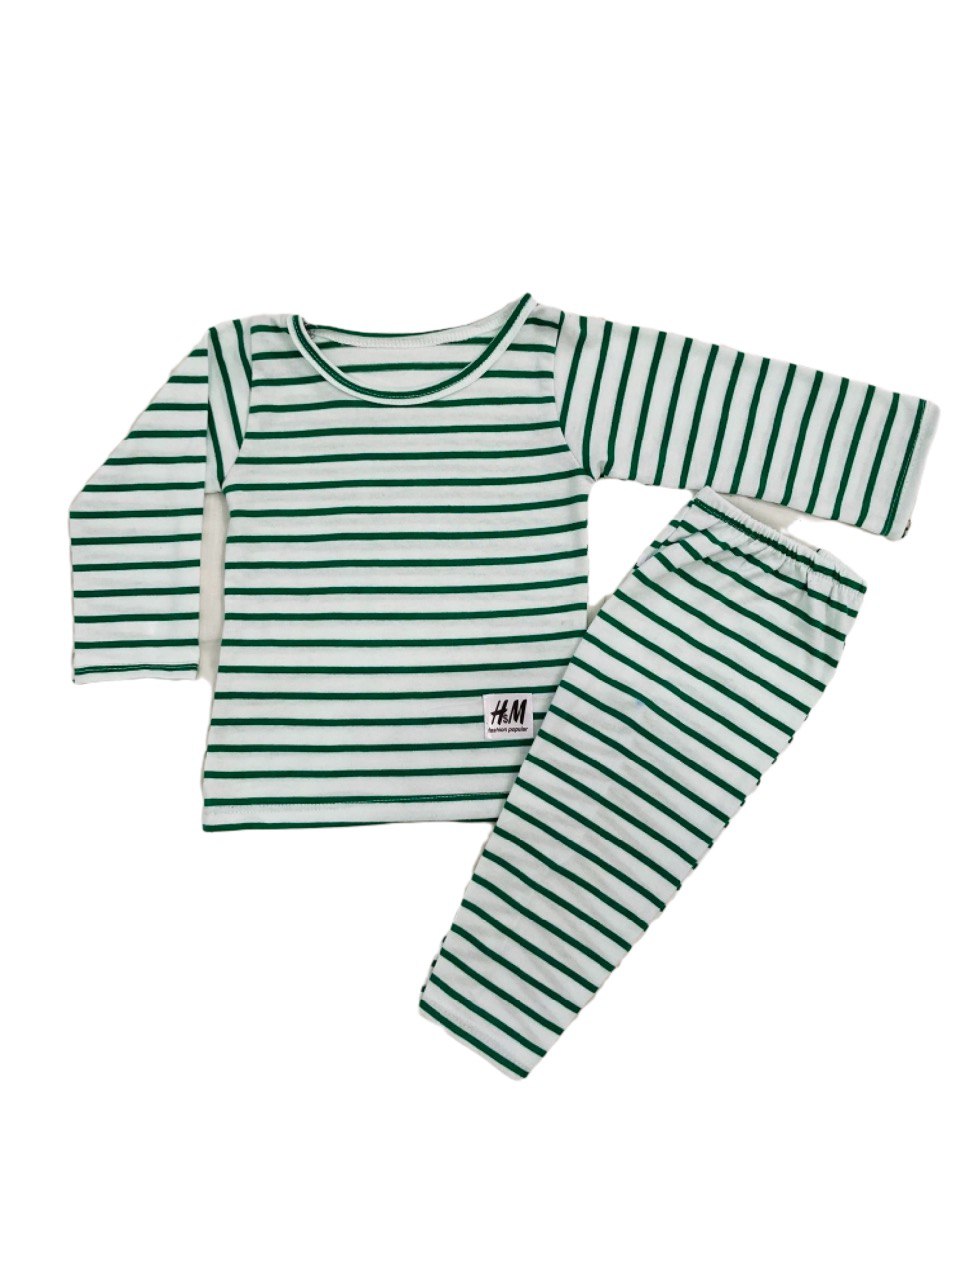 Pyjamas Sleepwear baby Kids Unisex Long Sleeve Baju Tidur Budak Murah Bayi  Lelaki Perempuan Lengan Panjang 6bulan-4tahun | Lazada